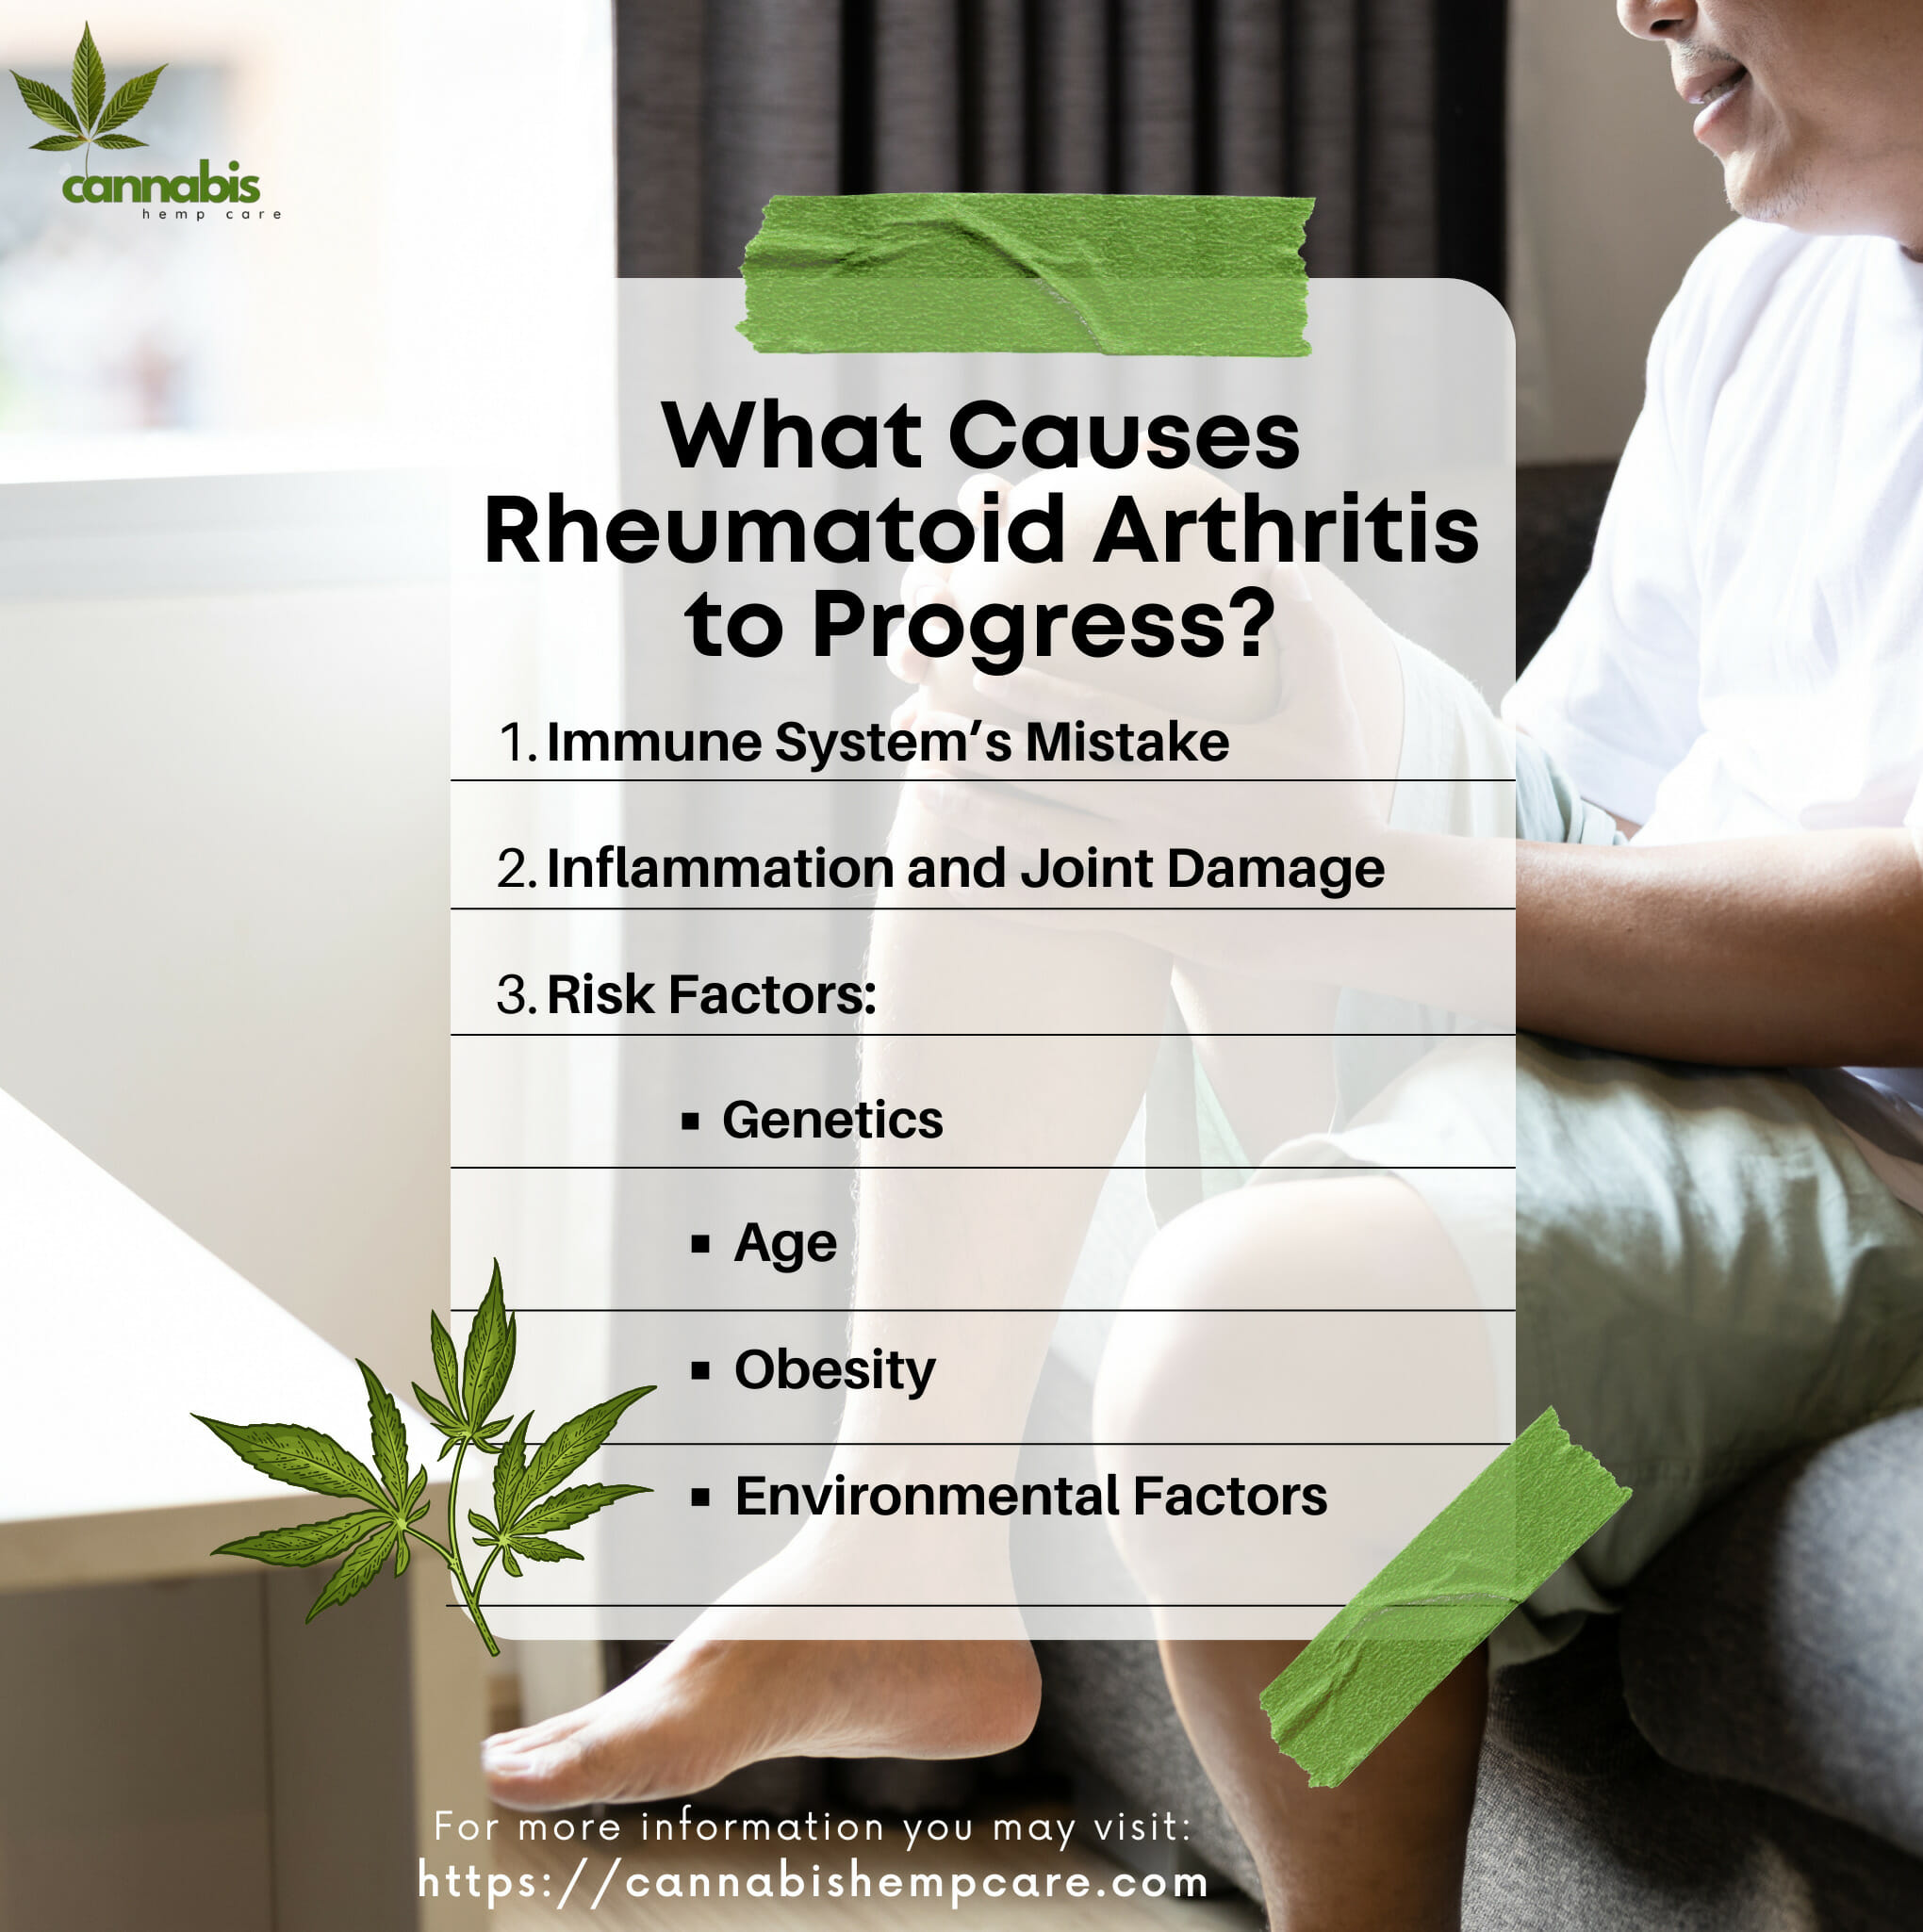 What Causes Rheumatoid Arthritis Progress?